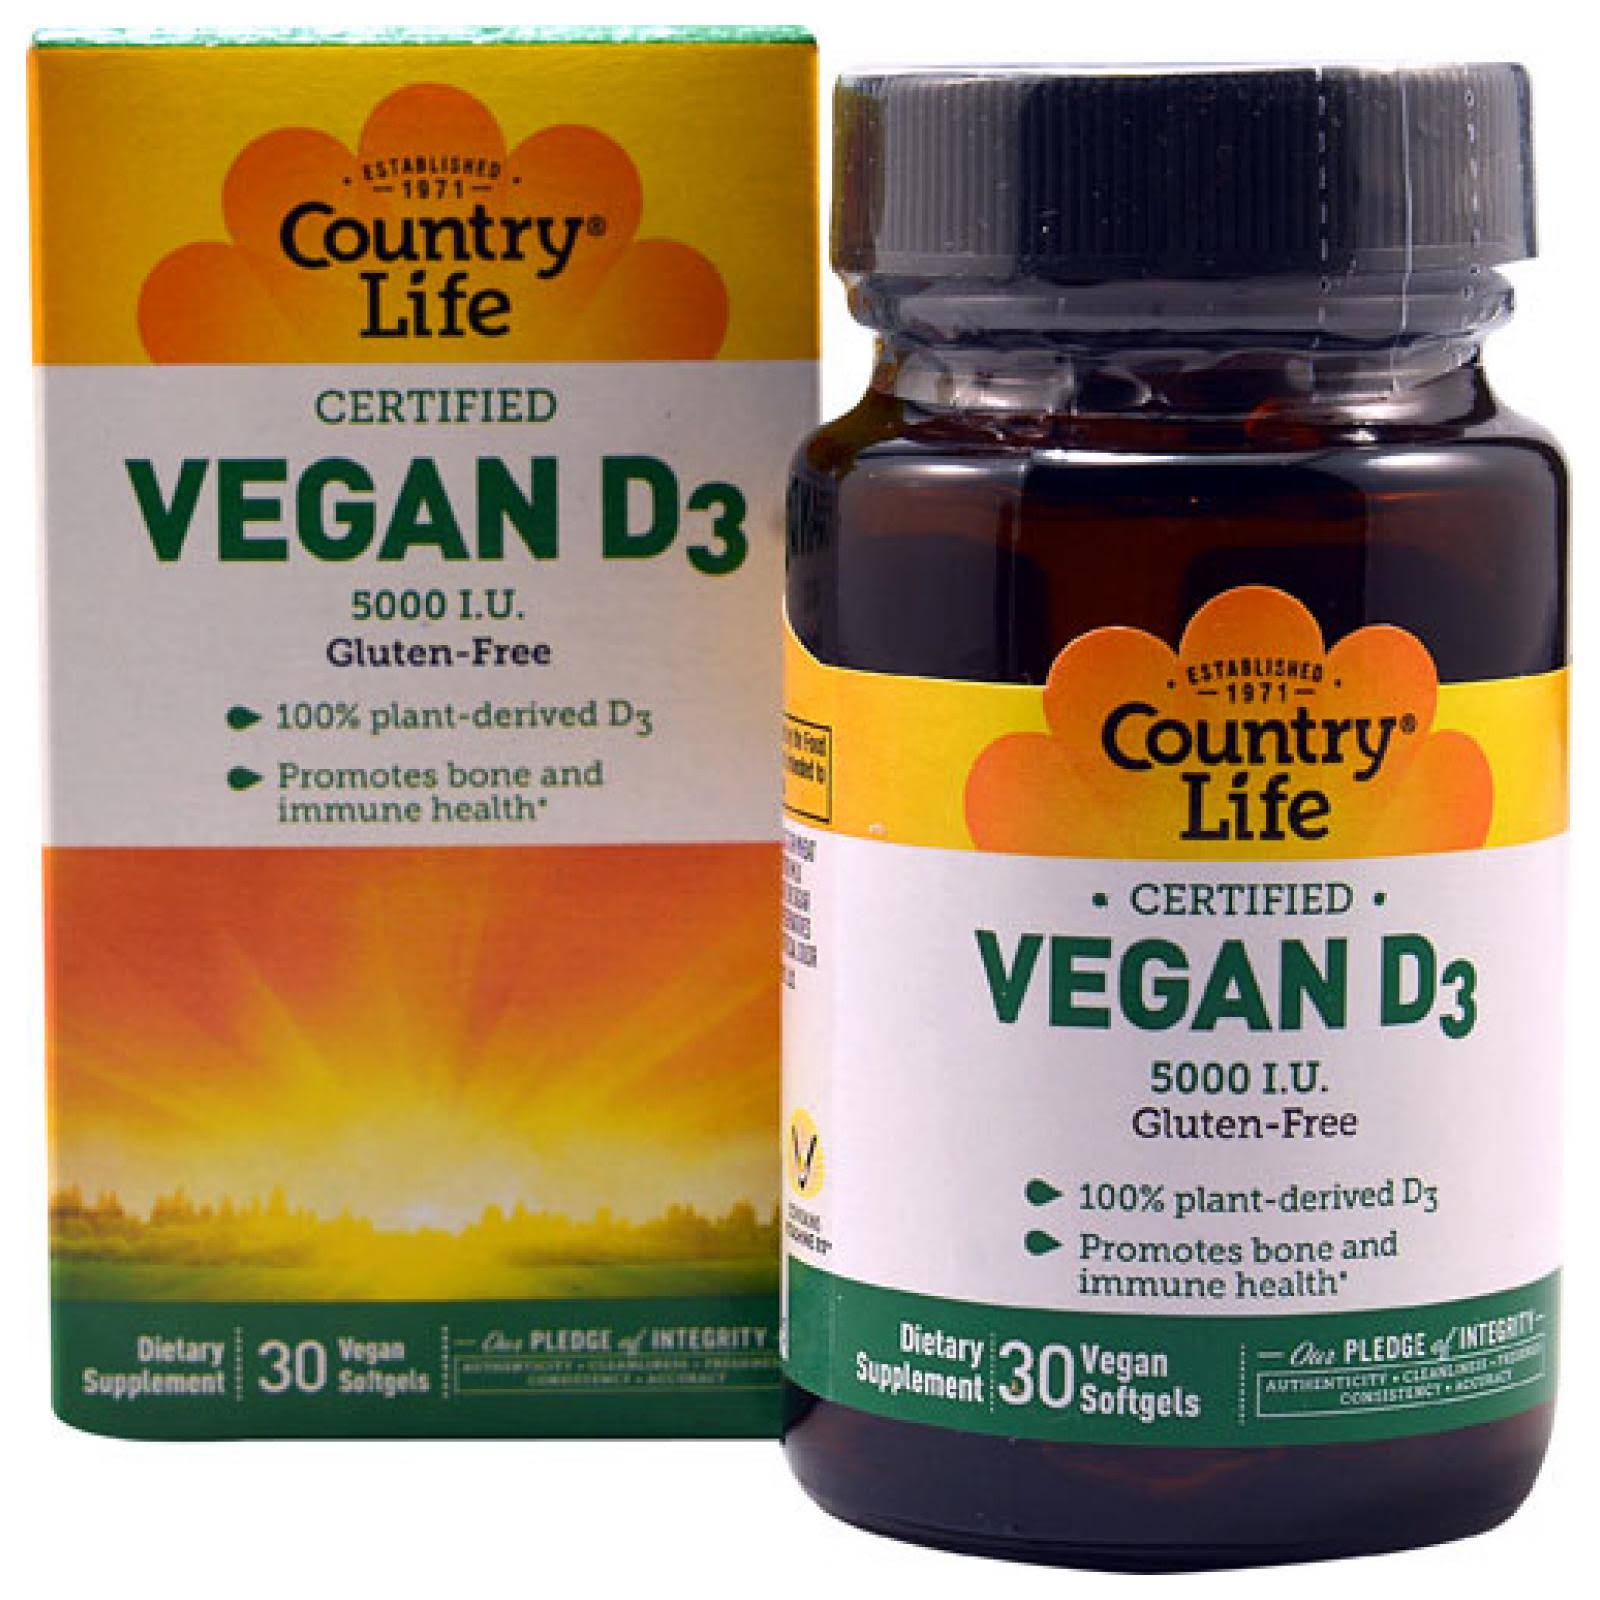 Country Life Vegan D3 Dietary Supplement - 30 Vegetarian Softgels